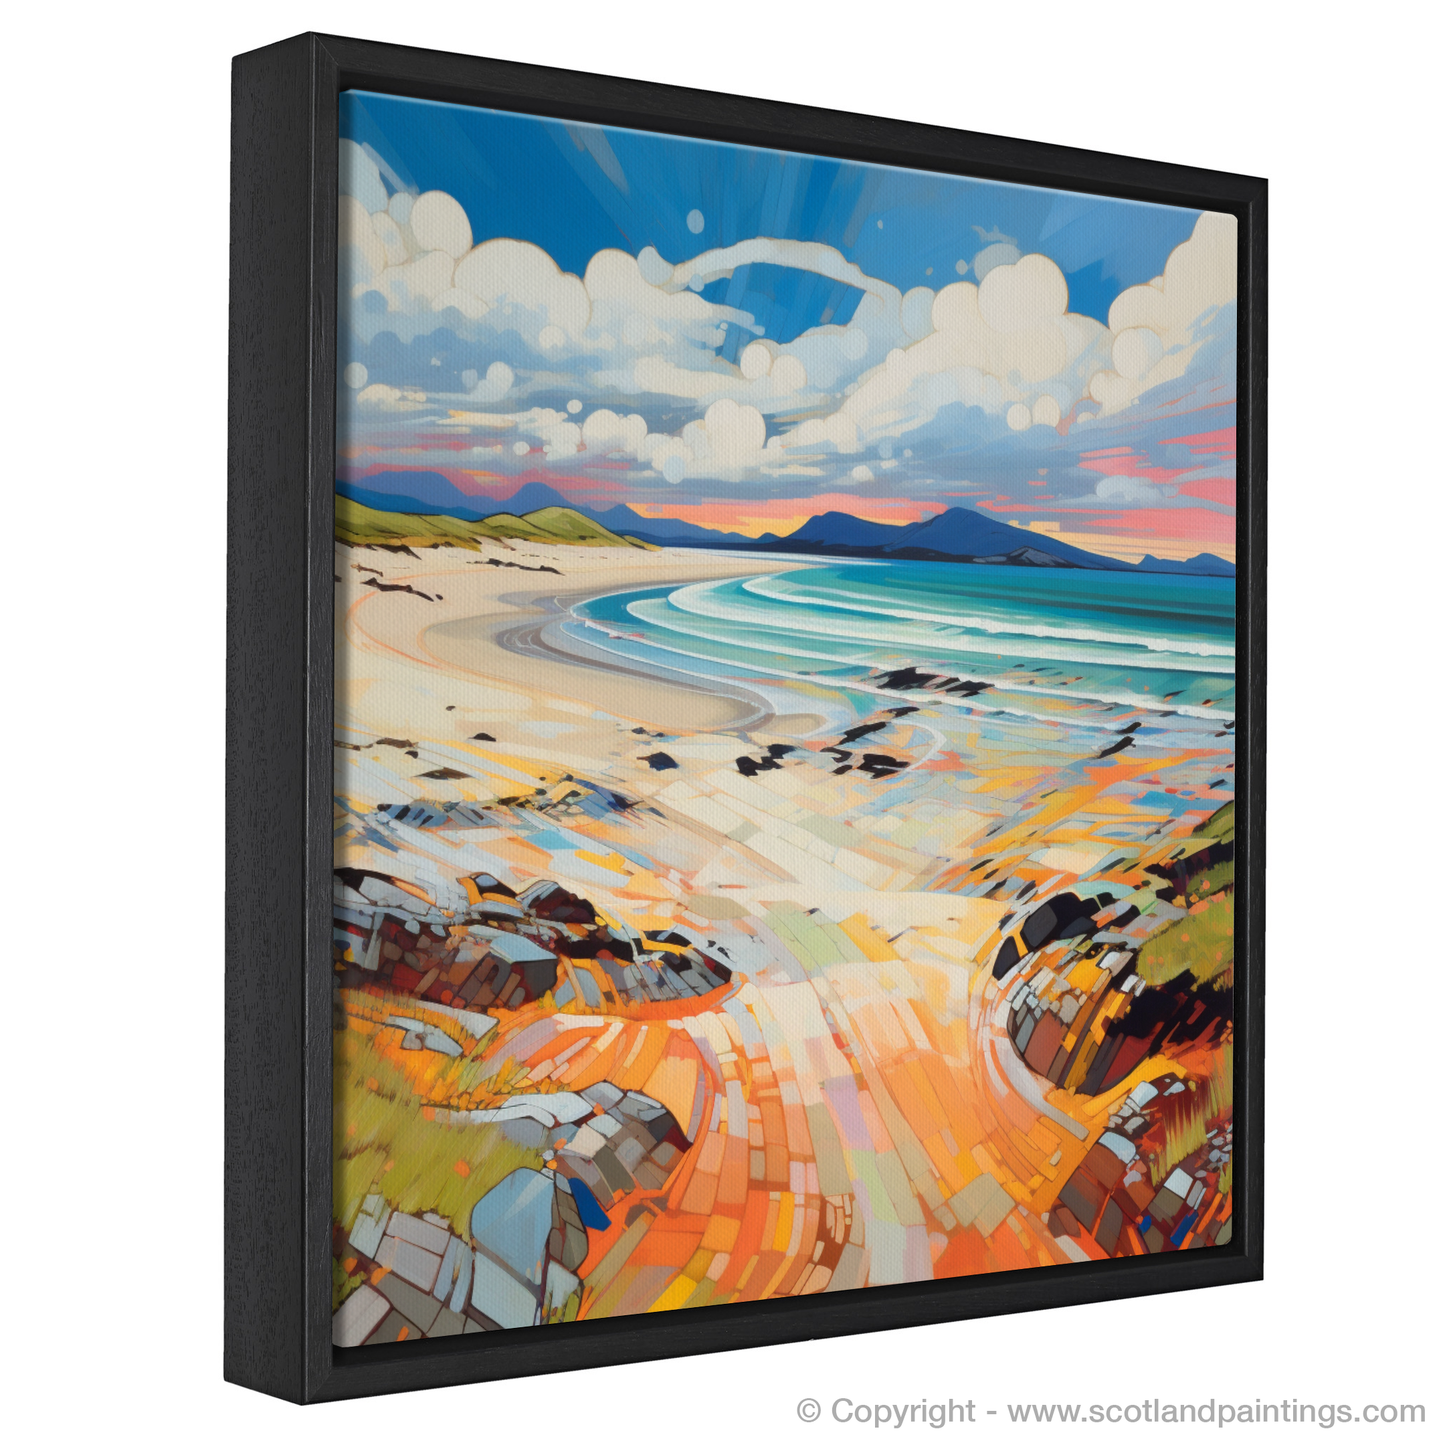 Painting and Art Print of Camusdarach Beach, Arisaig entitled "Sunset Dance on Camusdarach Beach".